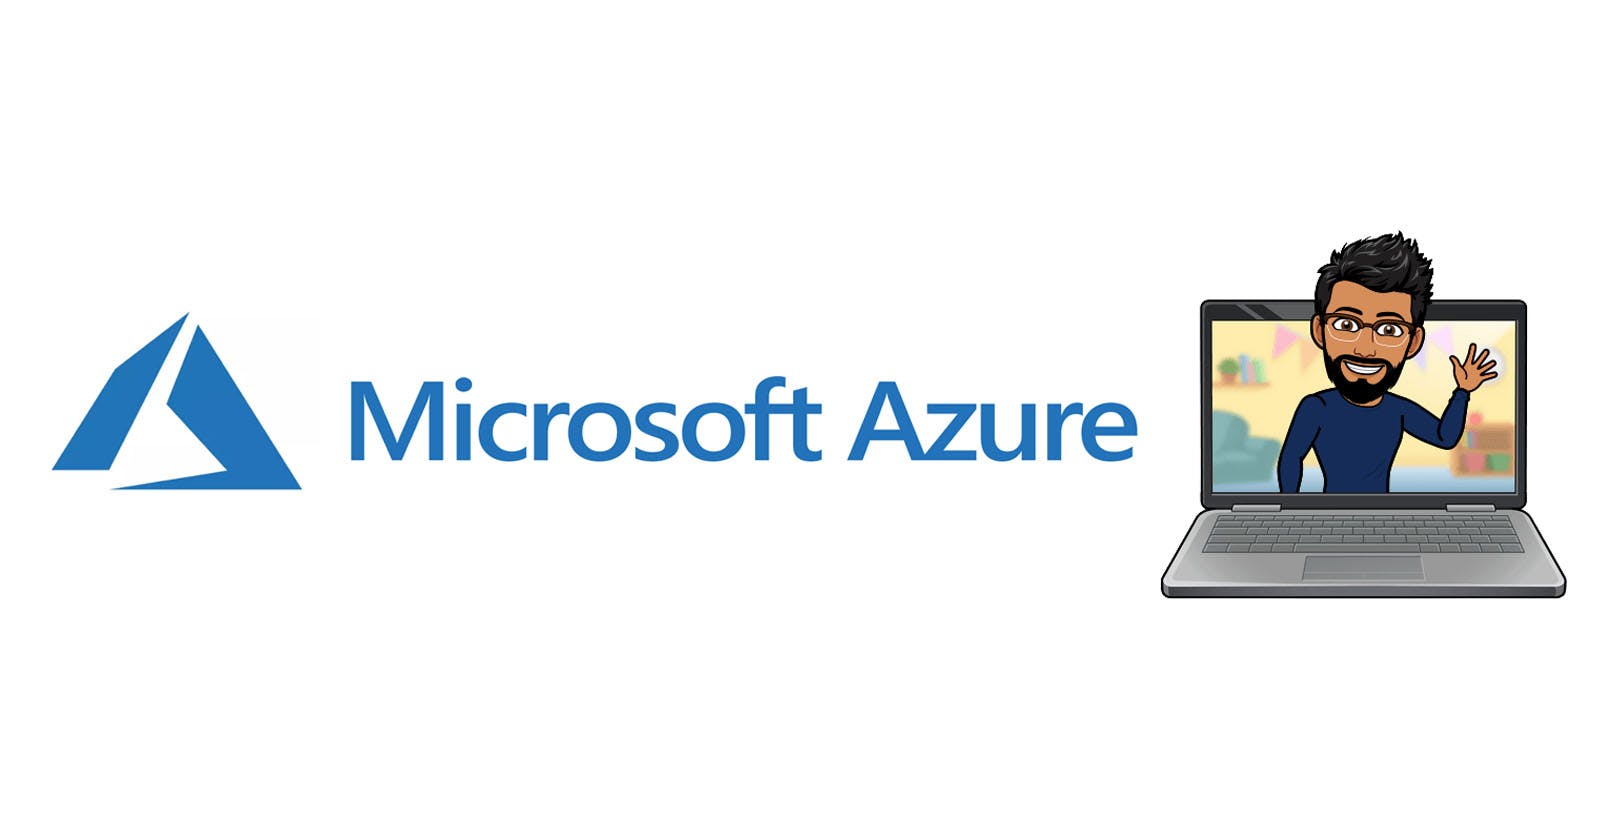 AZ-204: Developing Solutions for Microsoft Azure